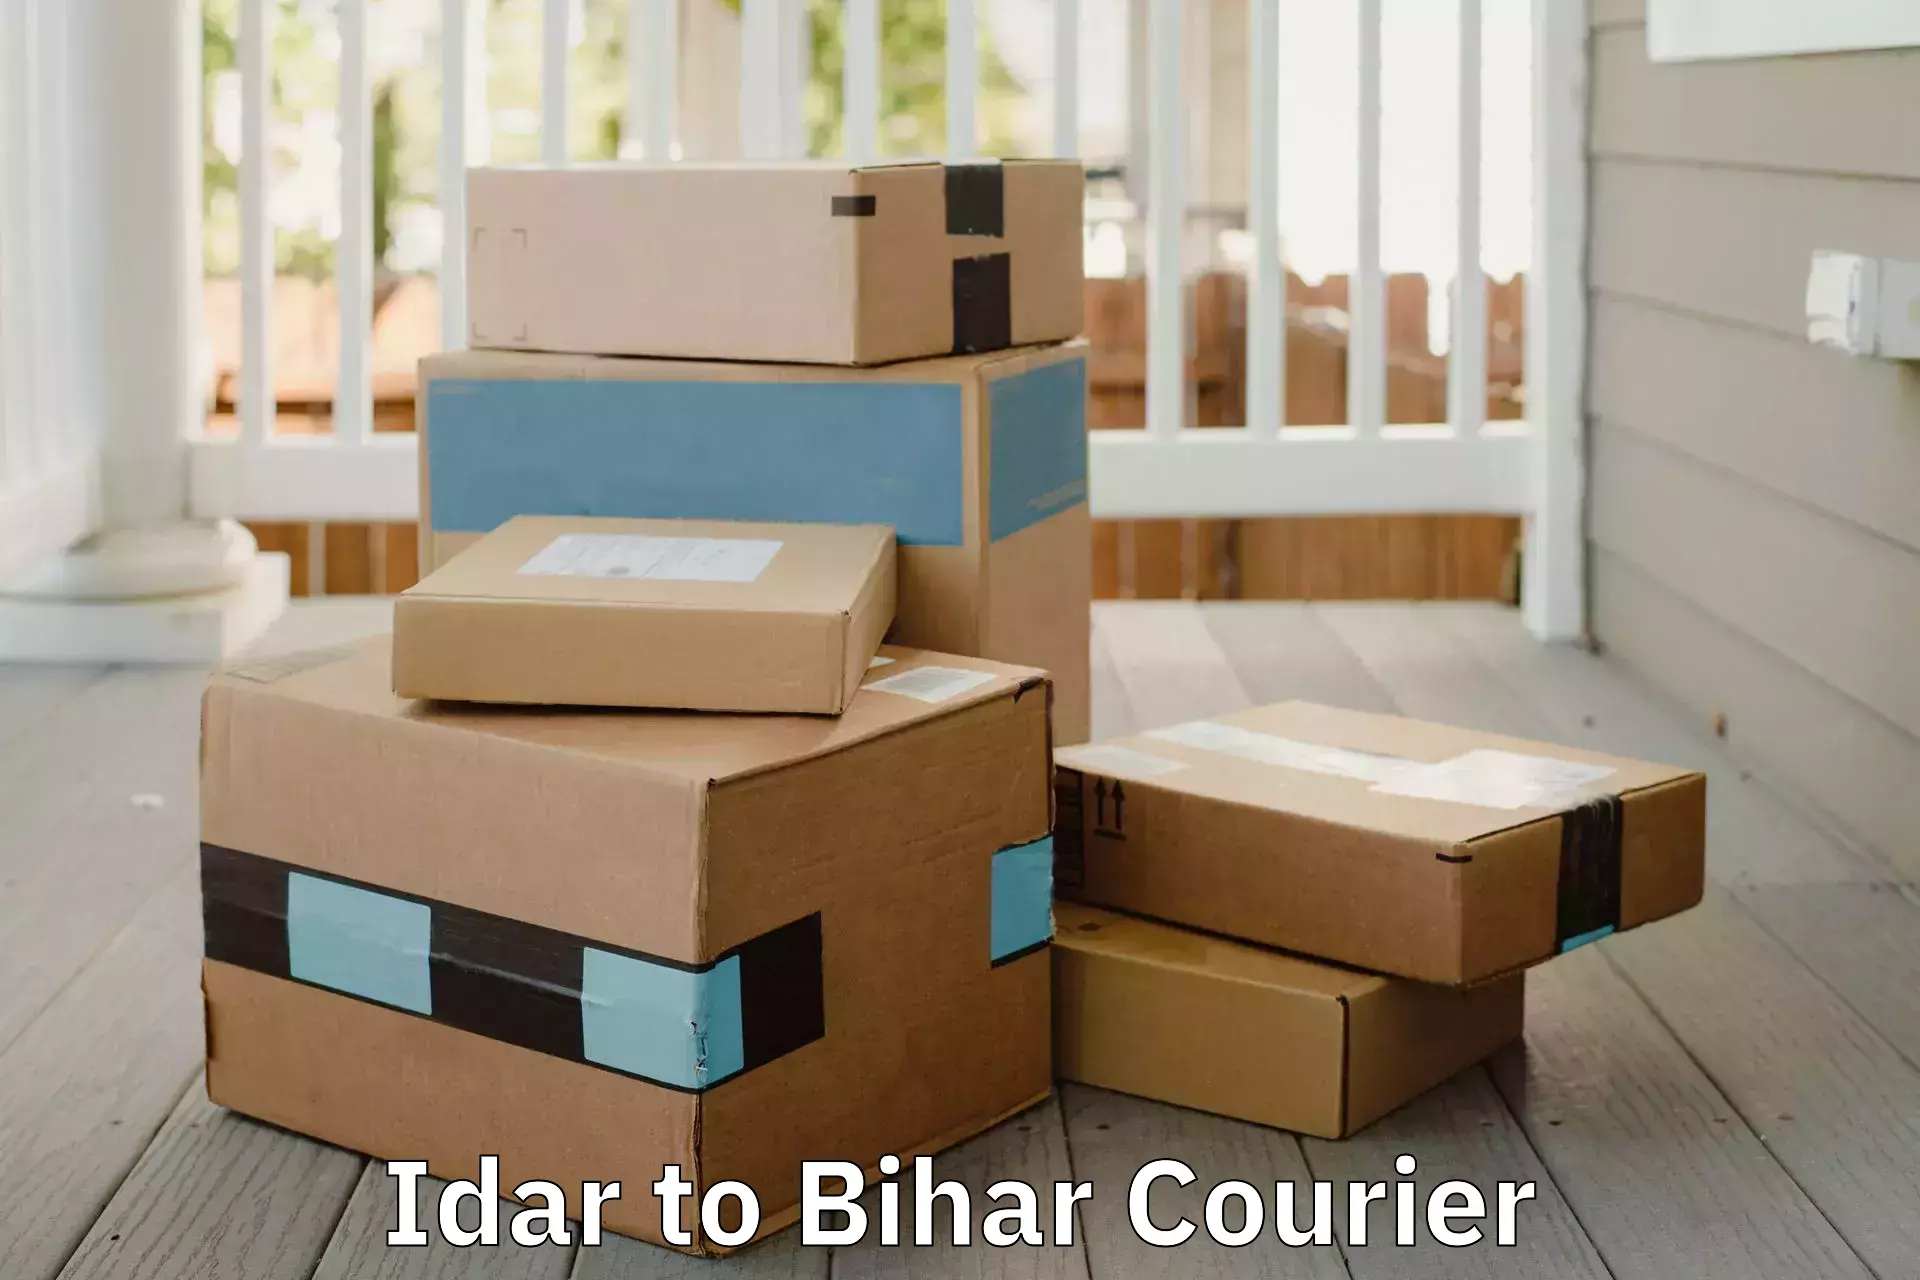 Professional home movers in Idar to Bihar